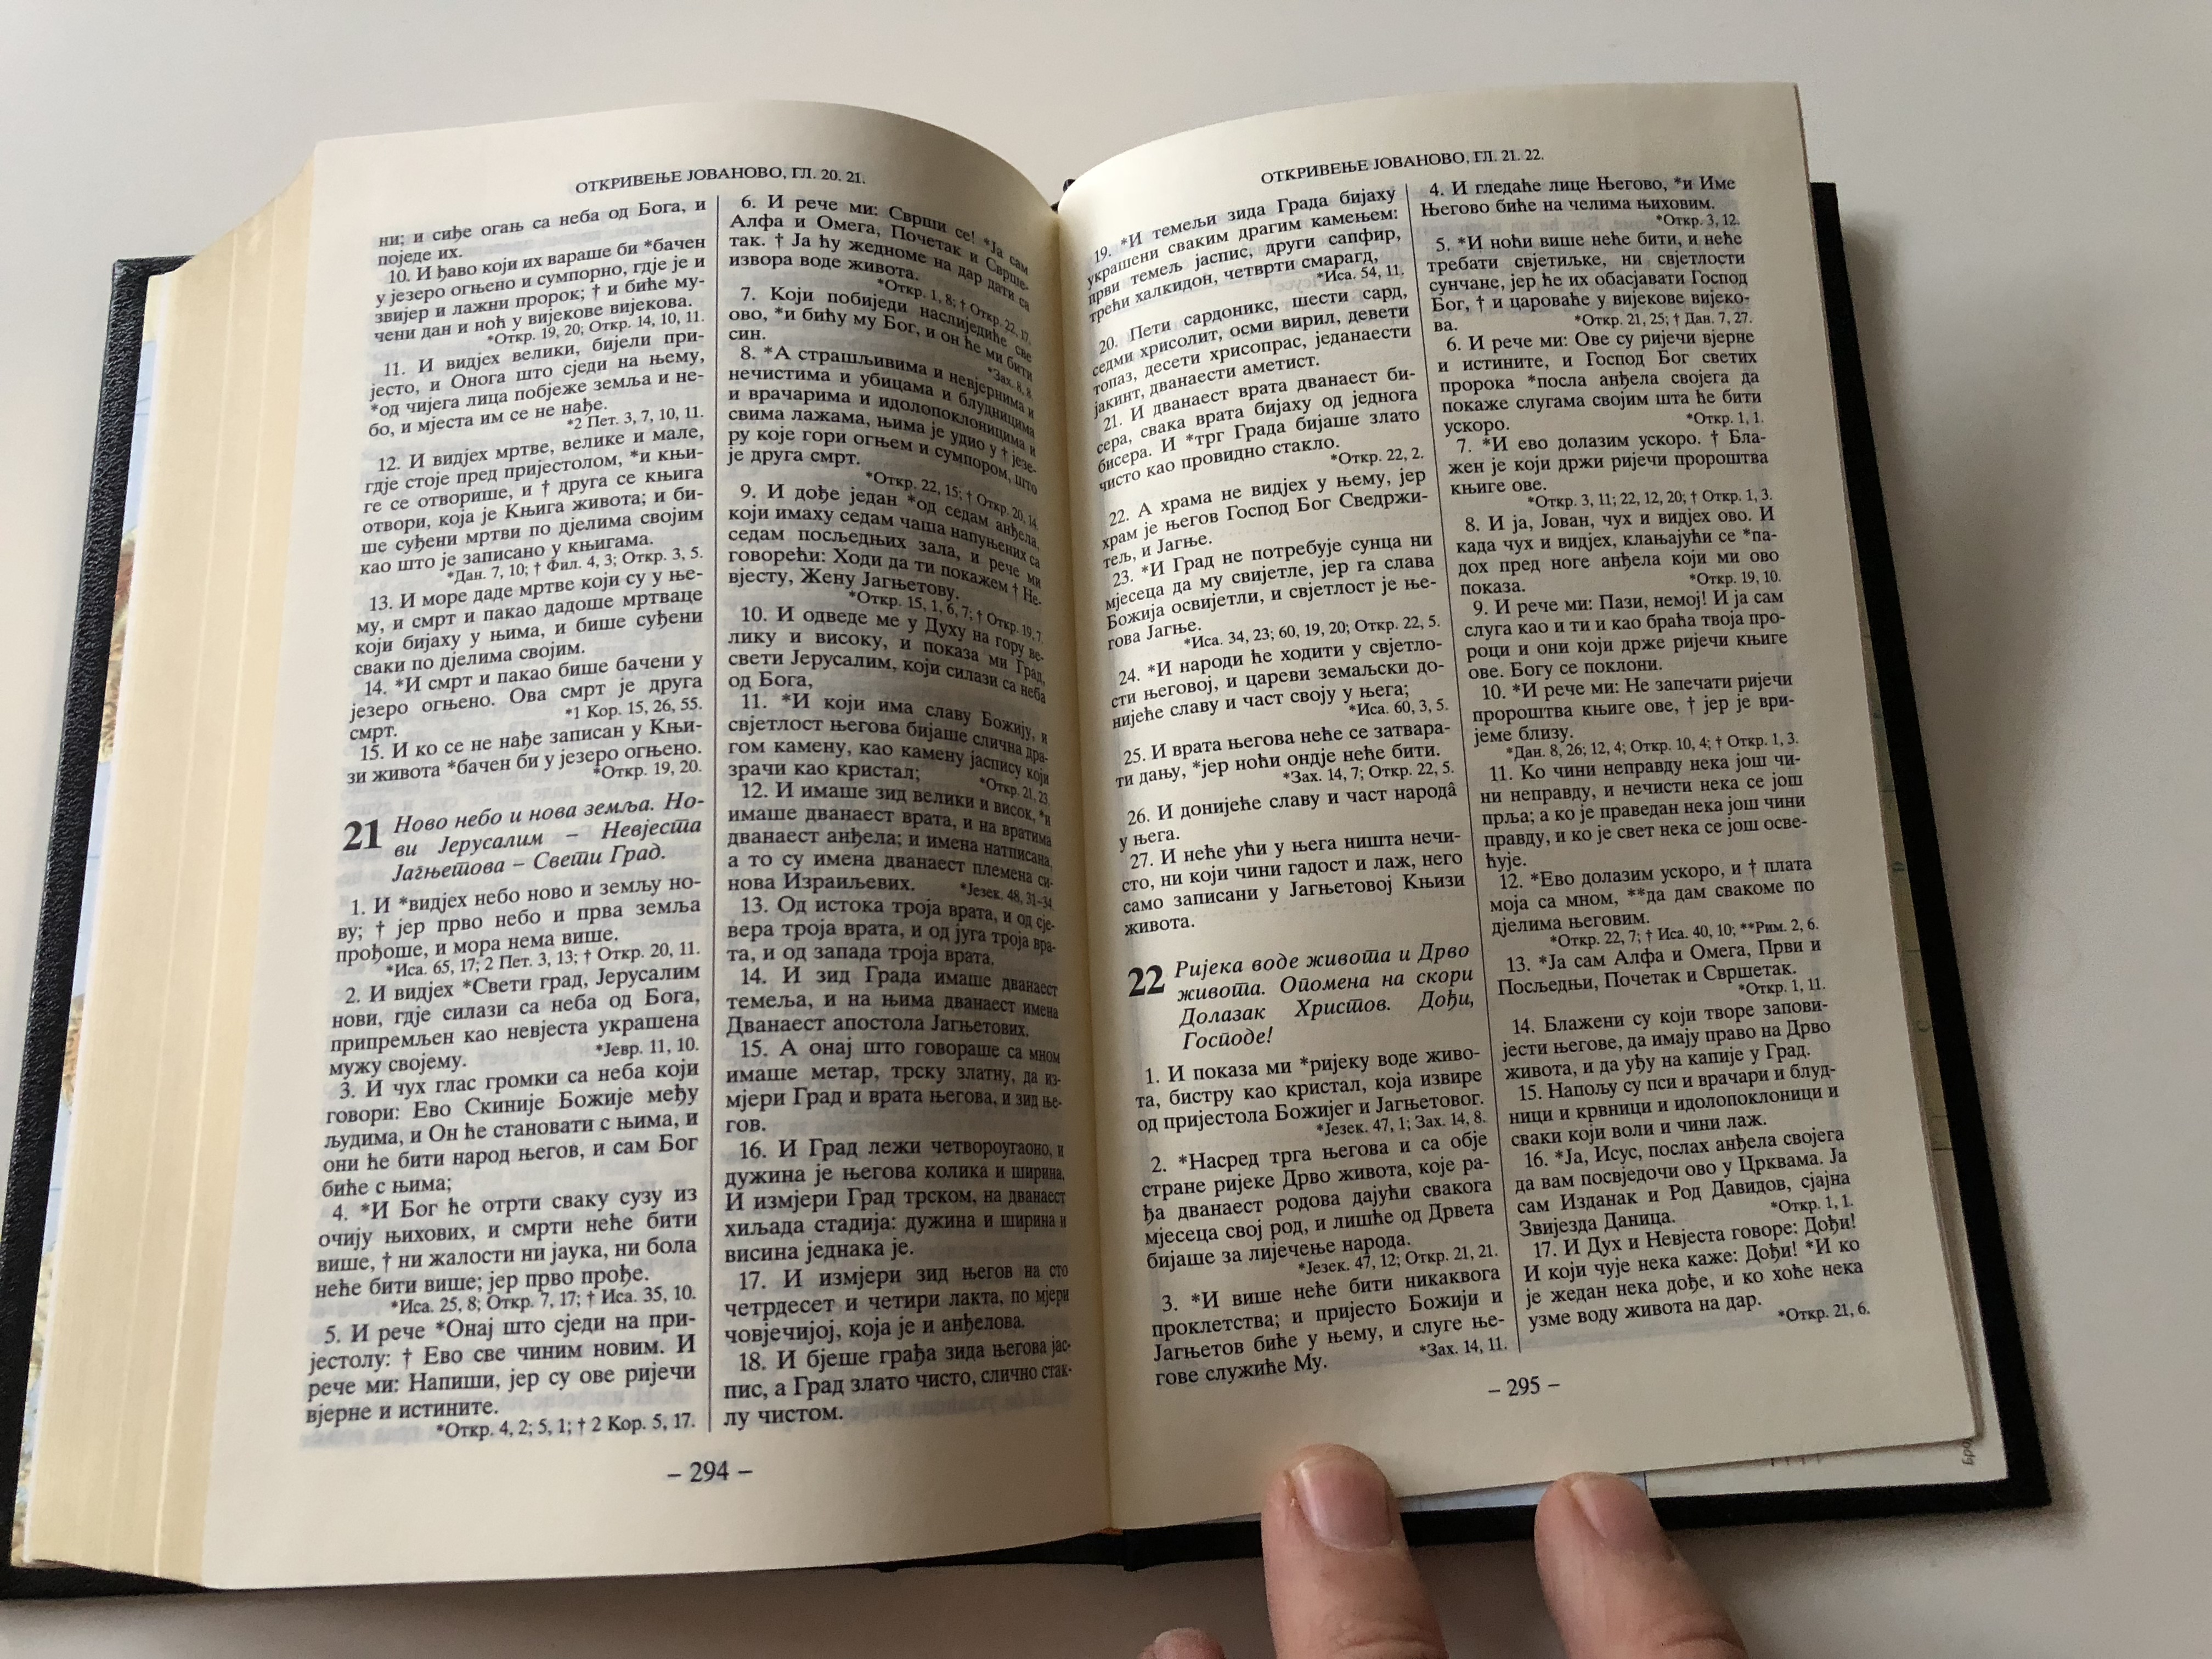 serbian-language-bible-burgundy-cover-with-golden-cross-cyrillic-script-043hs-35-.jpg